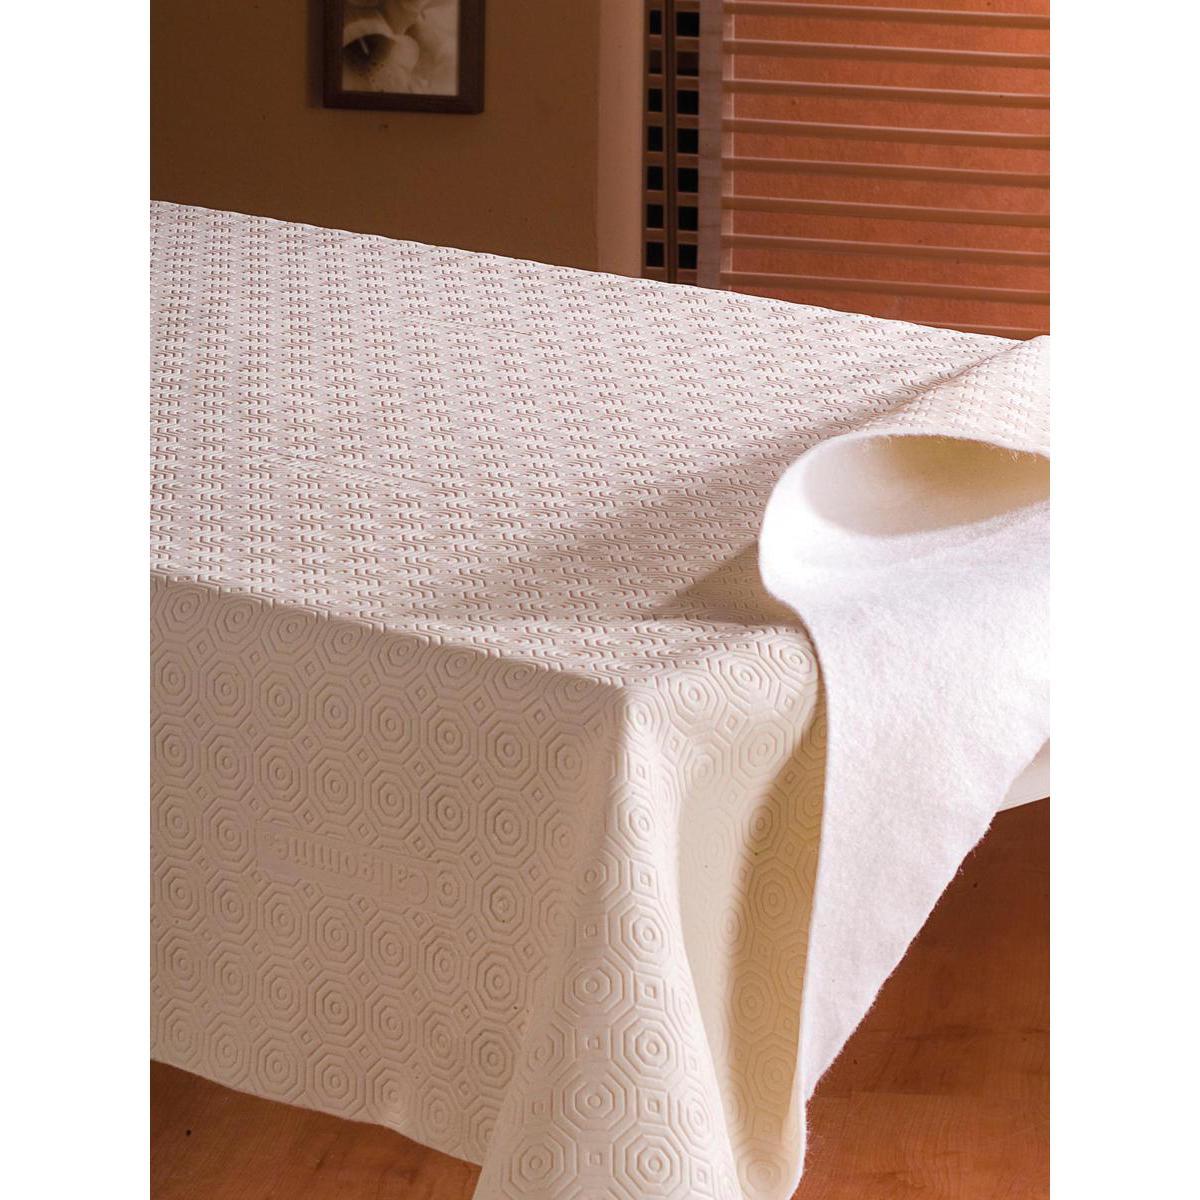 Protège-table - 94% PVC et 6% polyester - L 1,37 m - Blanc